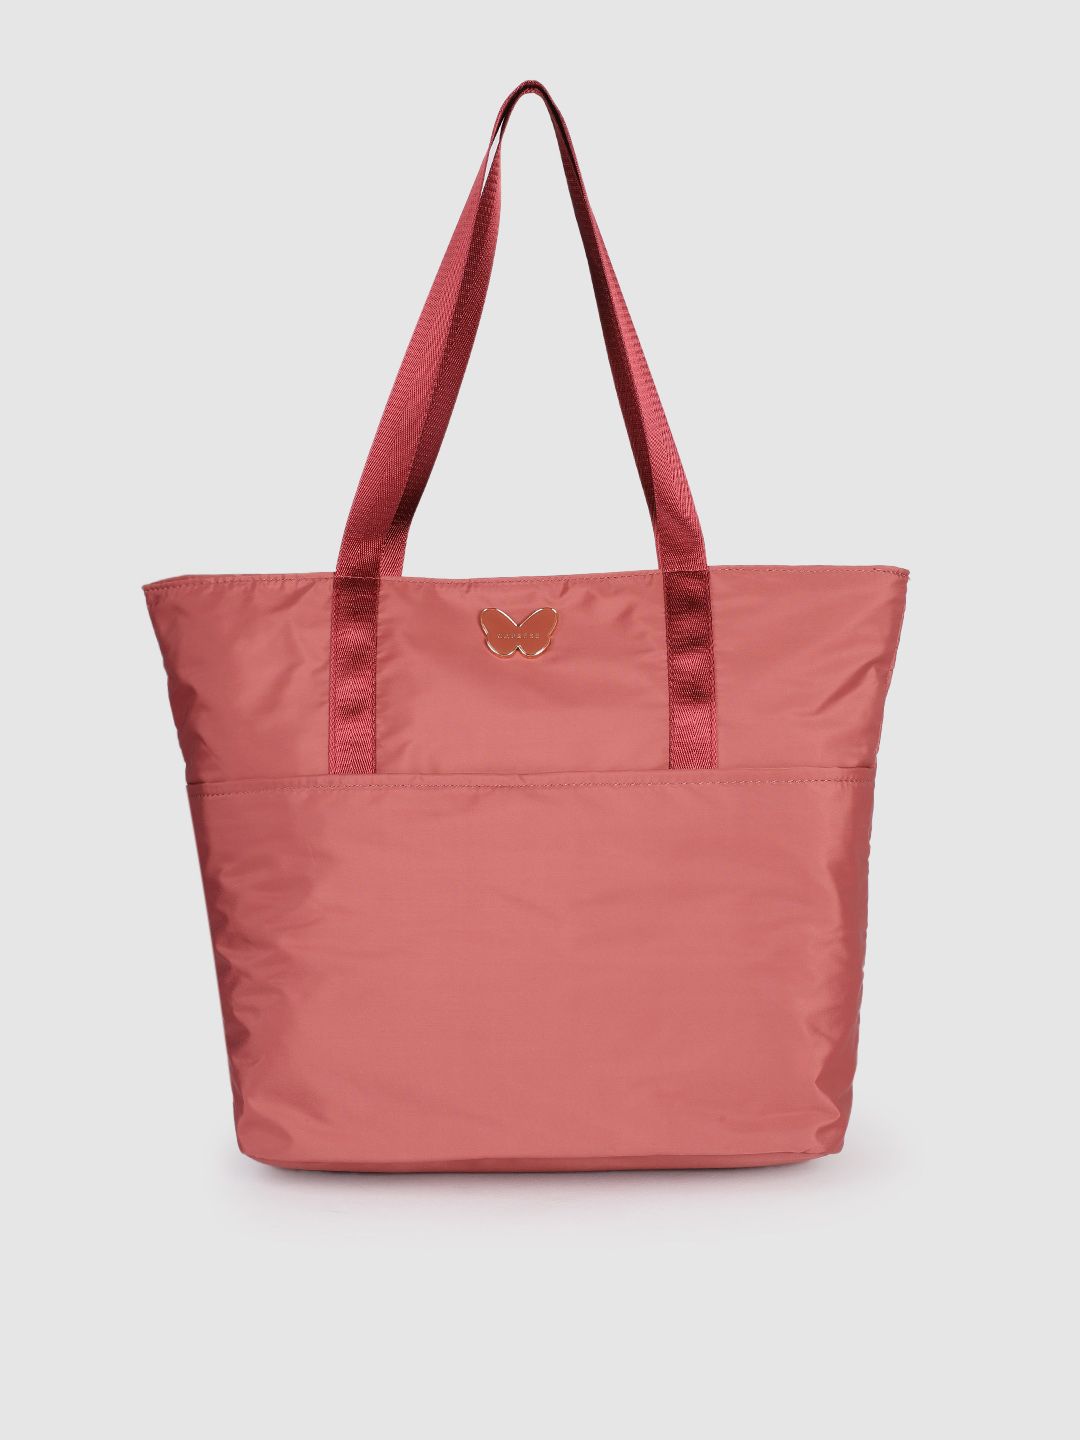 Caprese Pink Structured Shoulder Bag Price in India